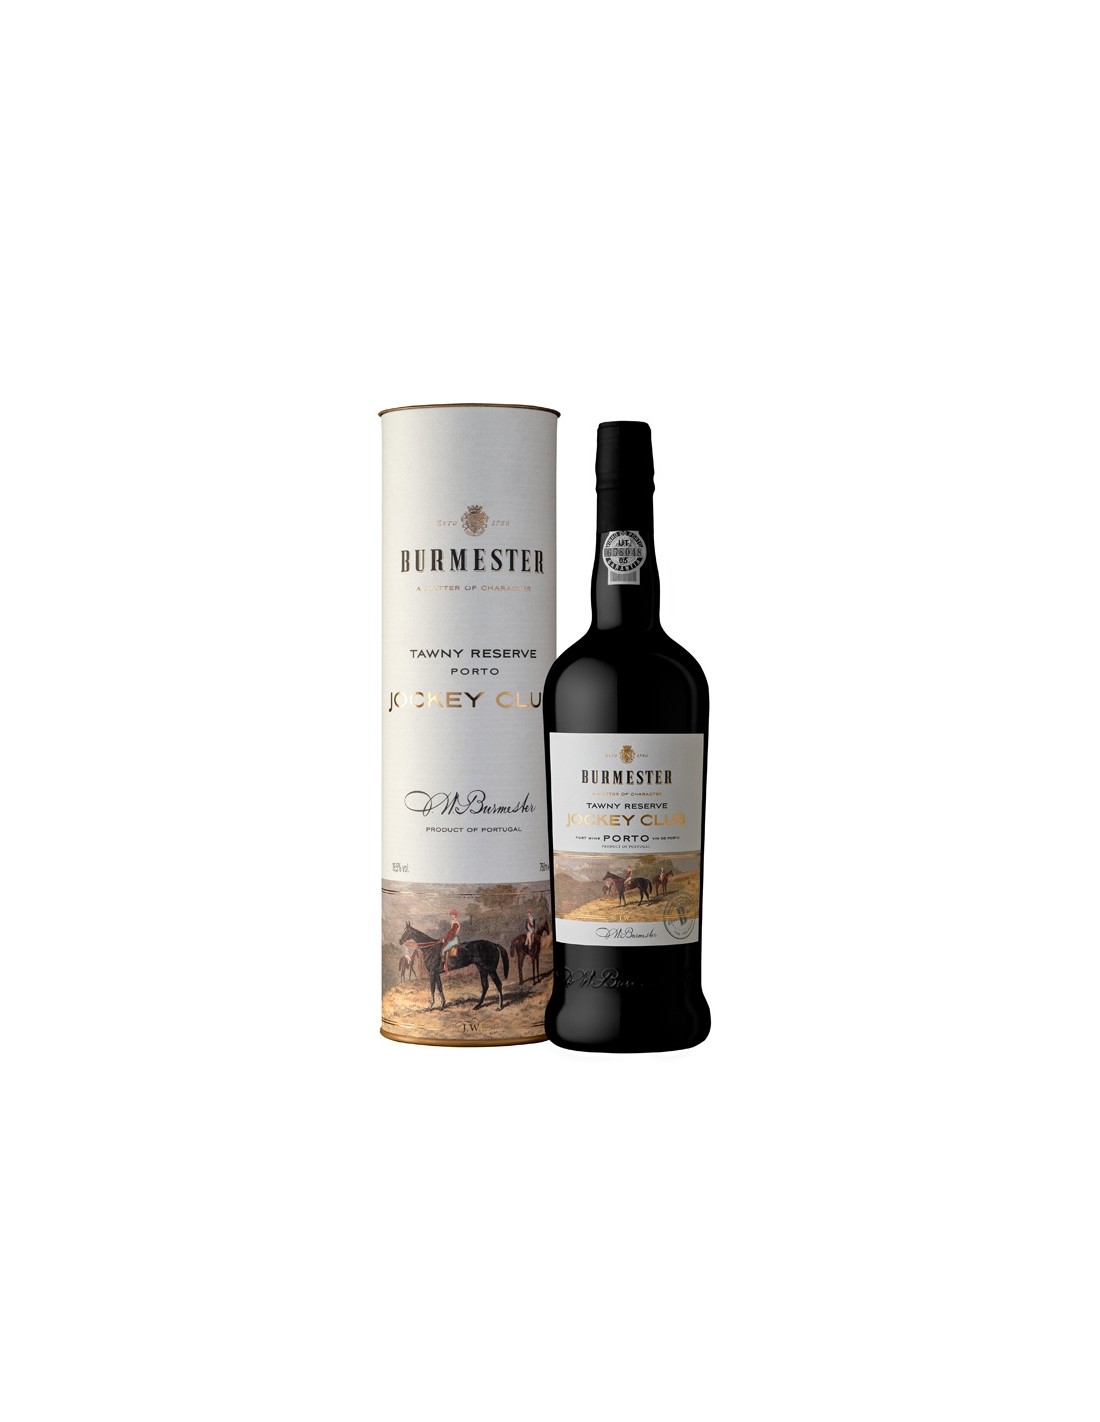 Vin porto sec, Burmester Tawny Reserve, 0.75L, 19.5% alc., Portugalia alcooldiscount.ro